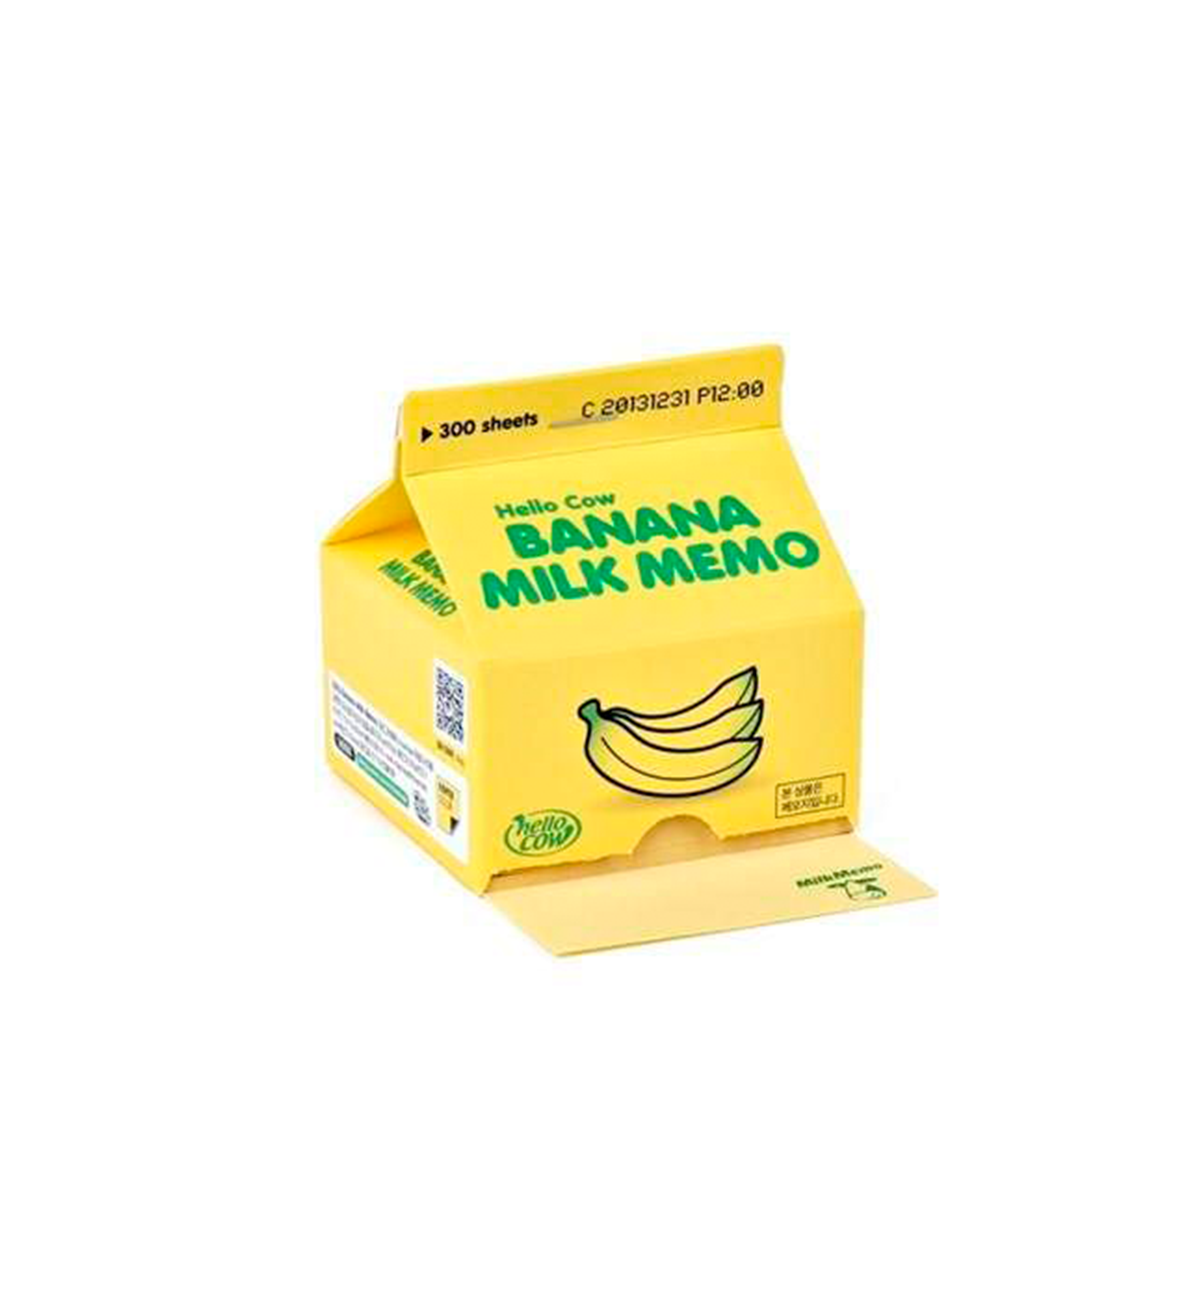 Banana Milk Memopad